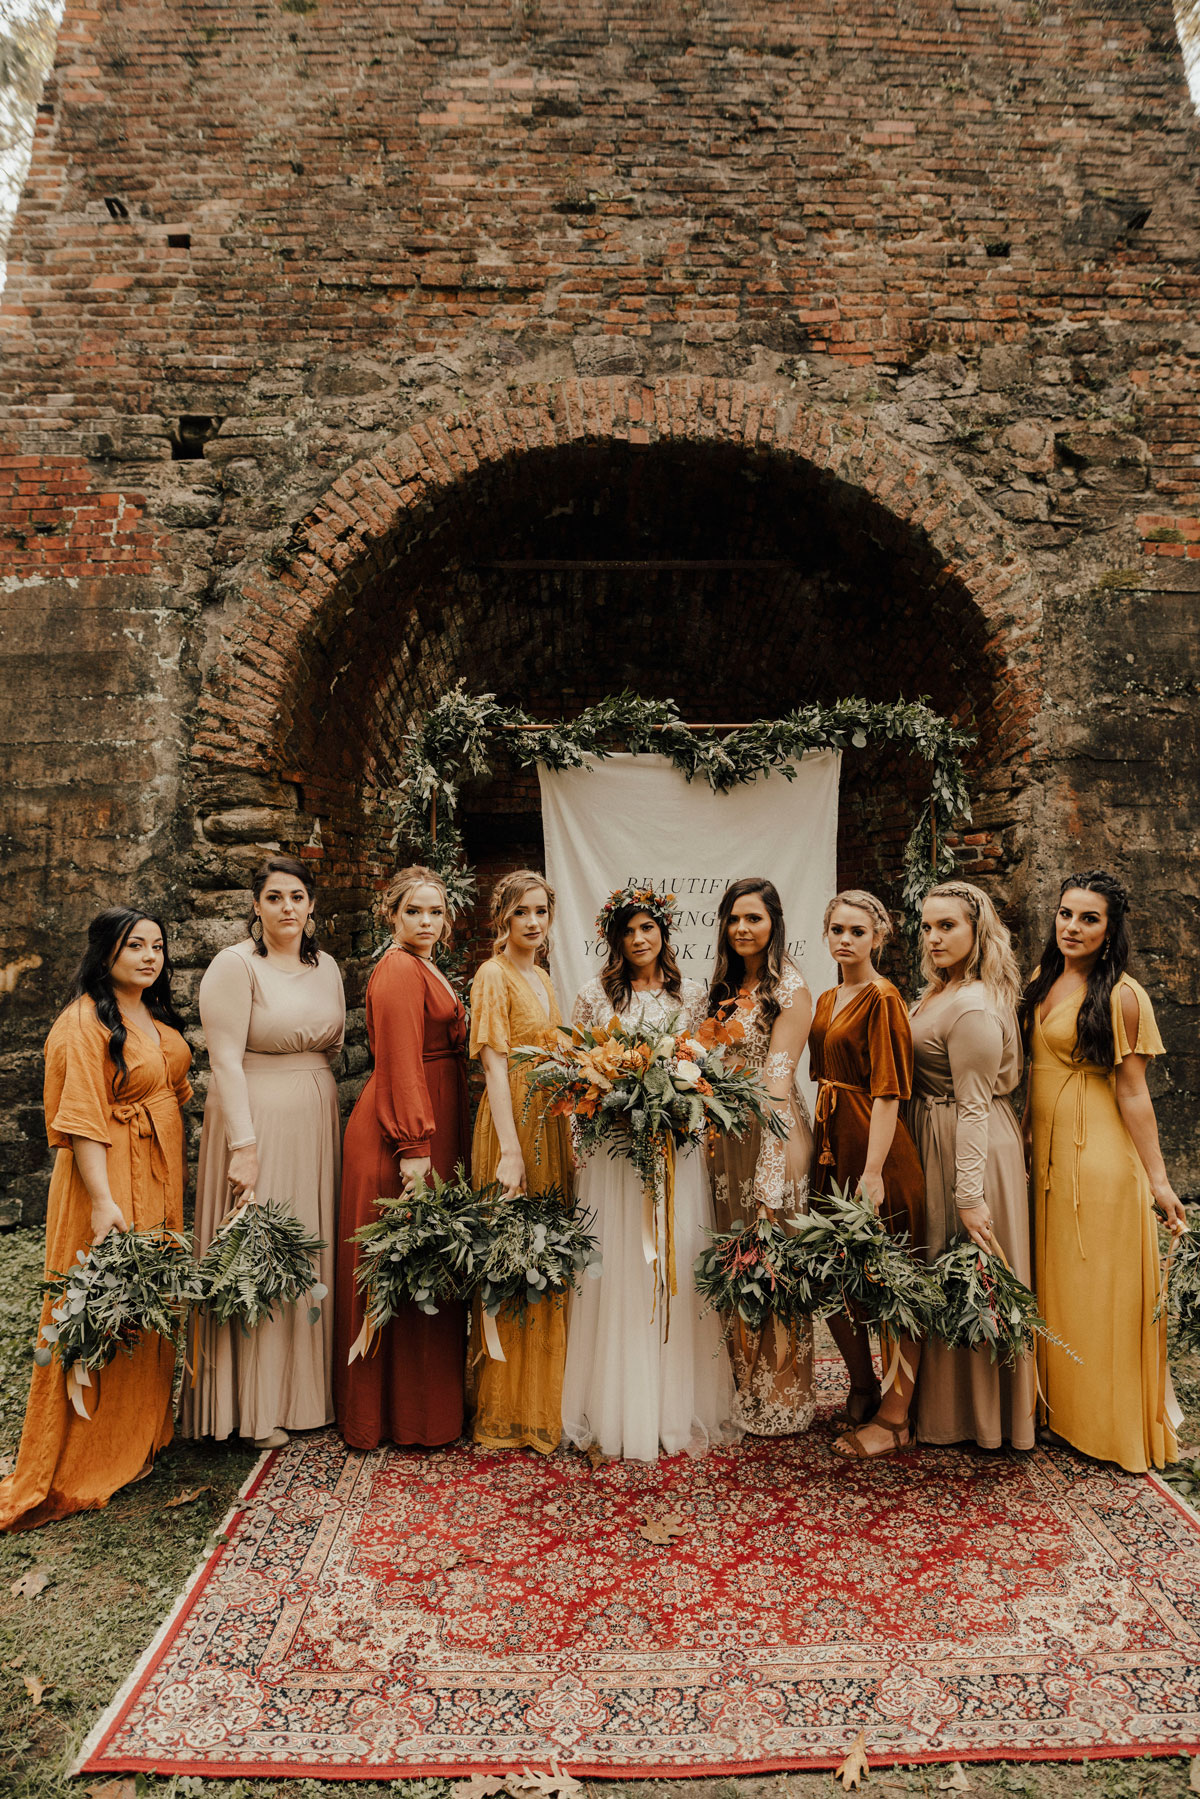 mustard color bridesmaid dresses